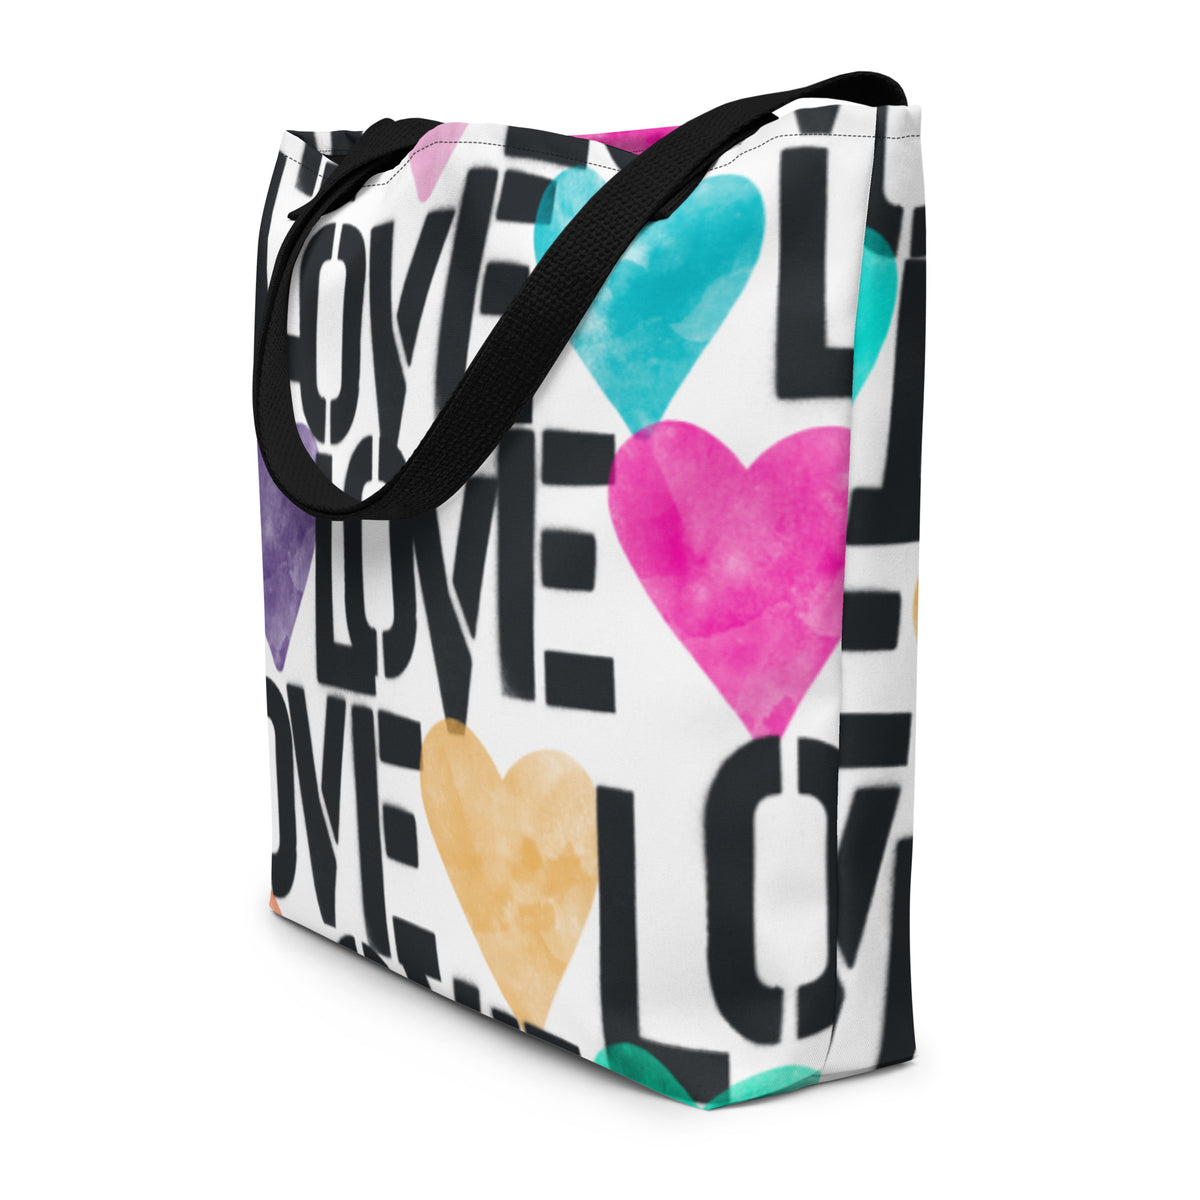 STENCIL LOVE All-Over Print Large Tote Bag, Book Bag, Gym Bag, Beach Bag, Tote Bag